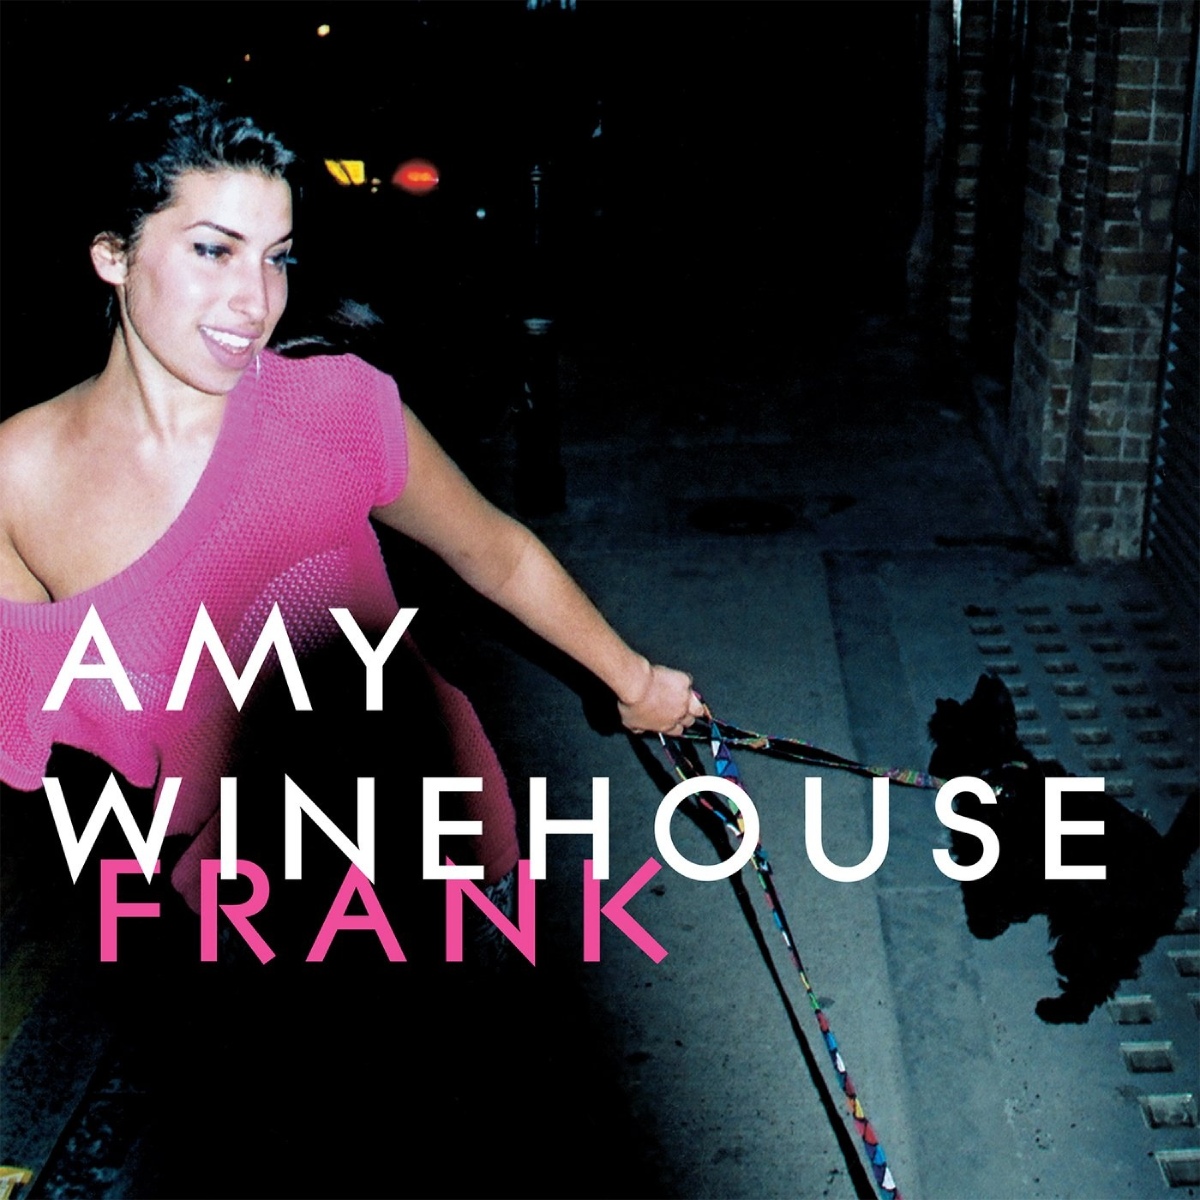 Обложка альбома «Frank» Эми Уайнхаус